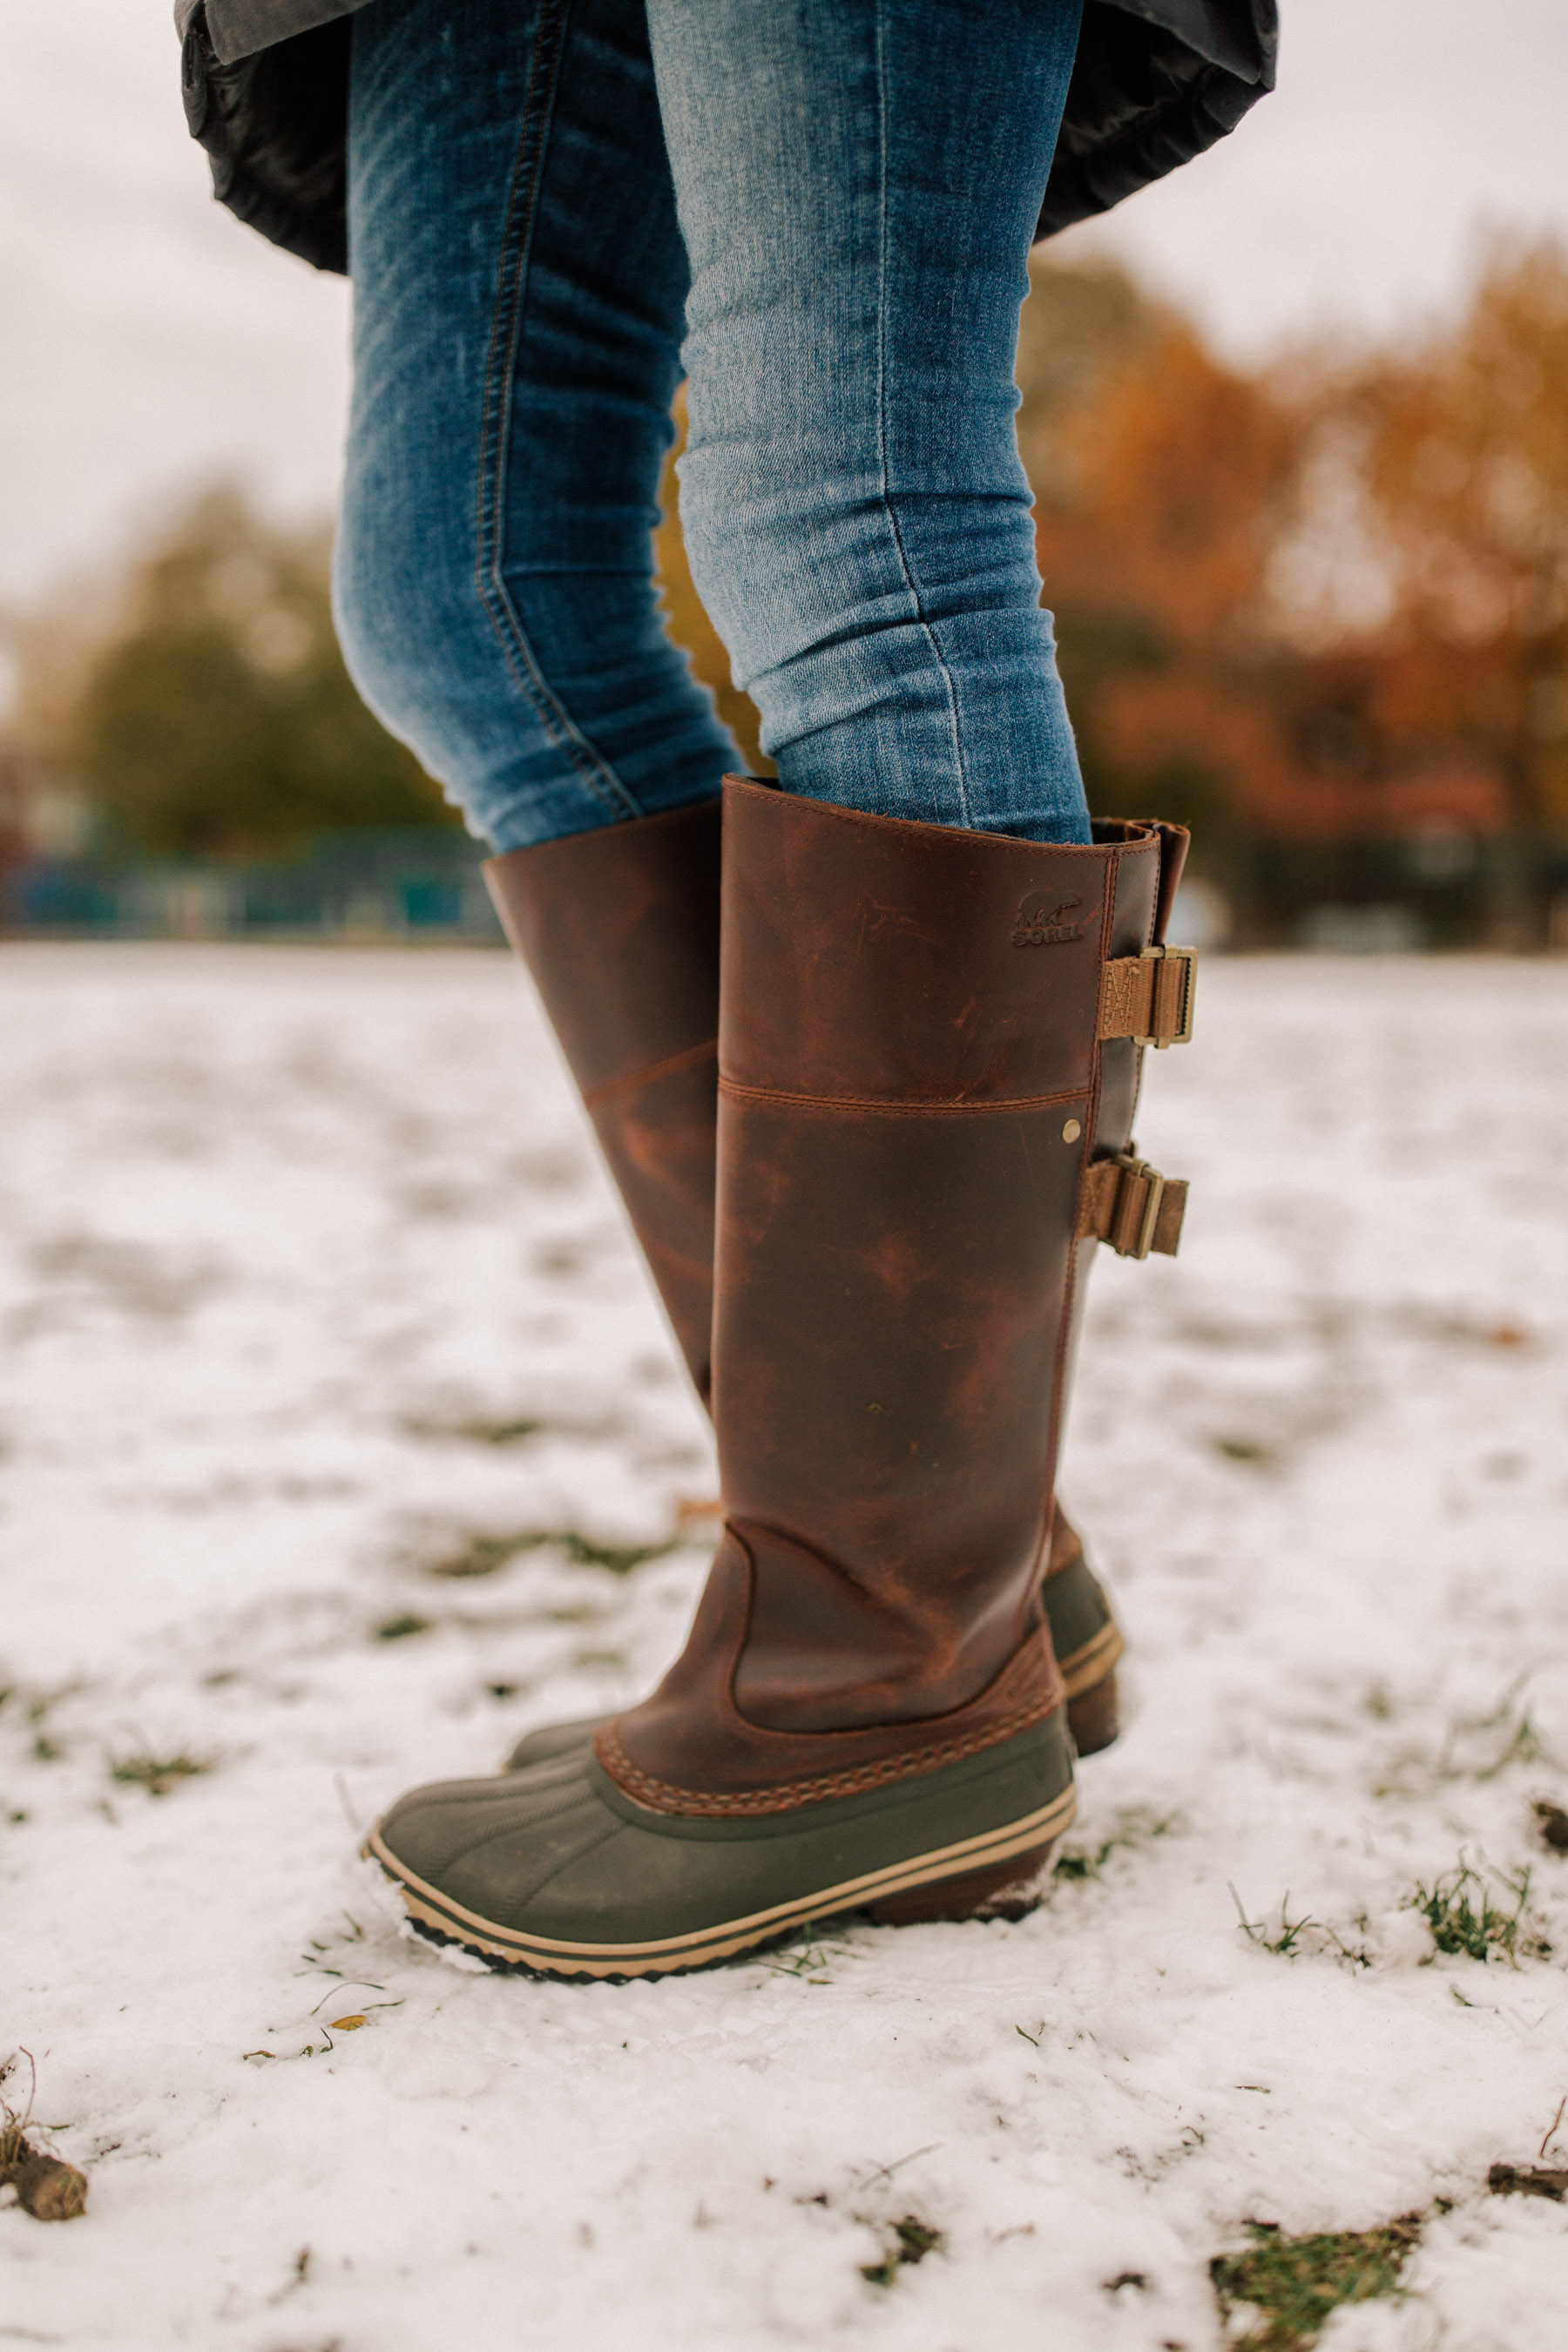 Sorel boots in snow